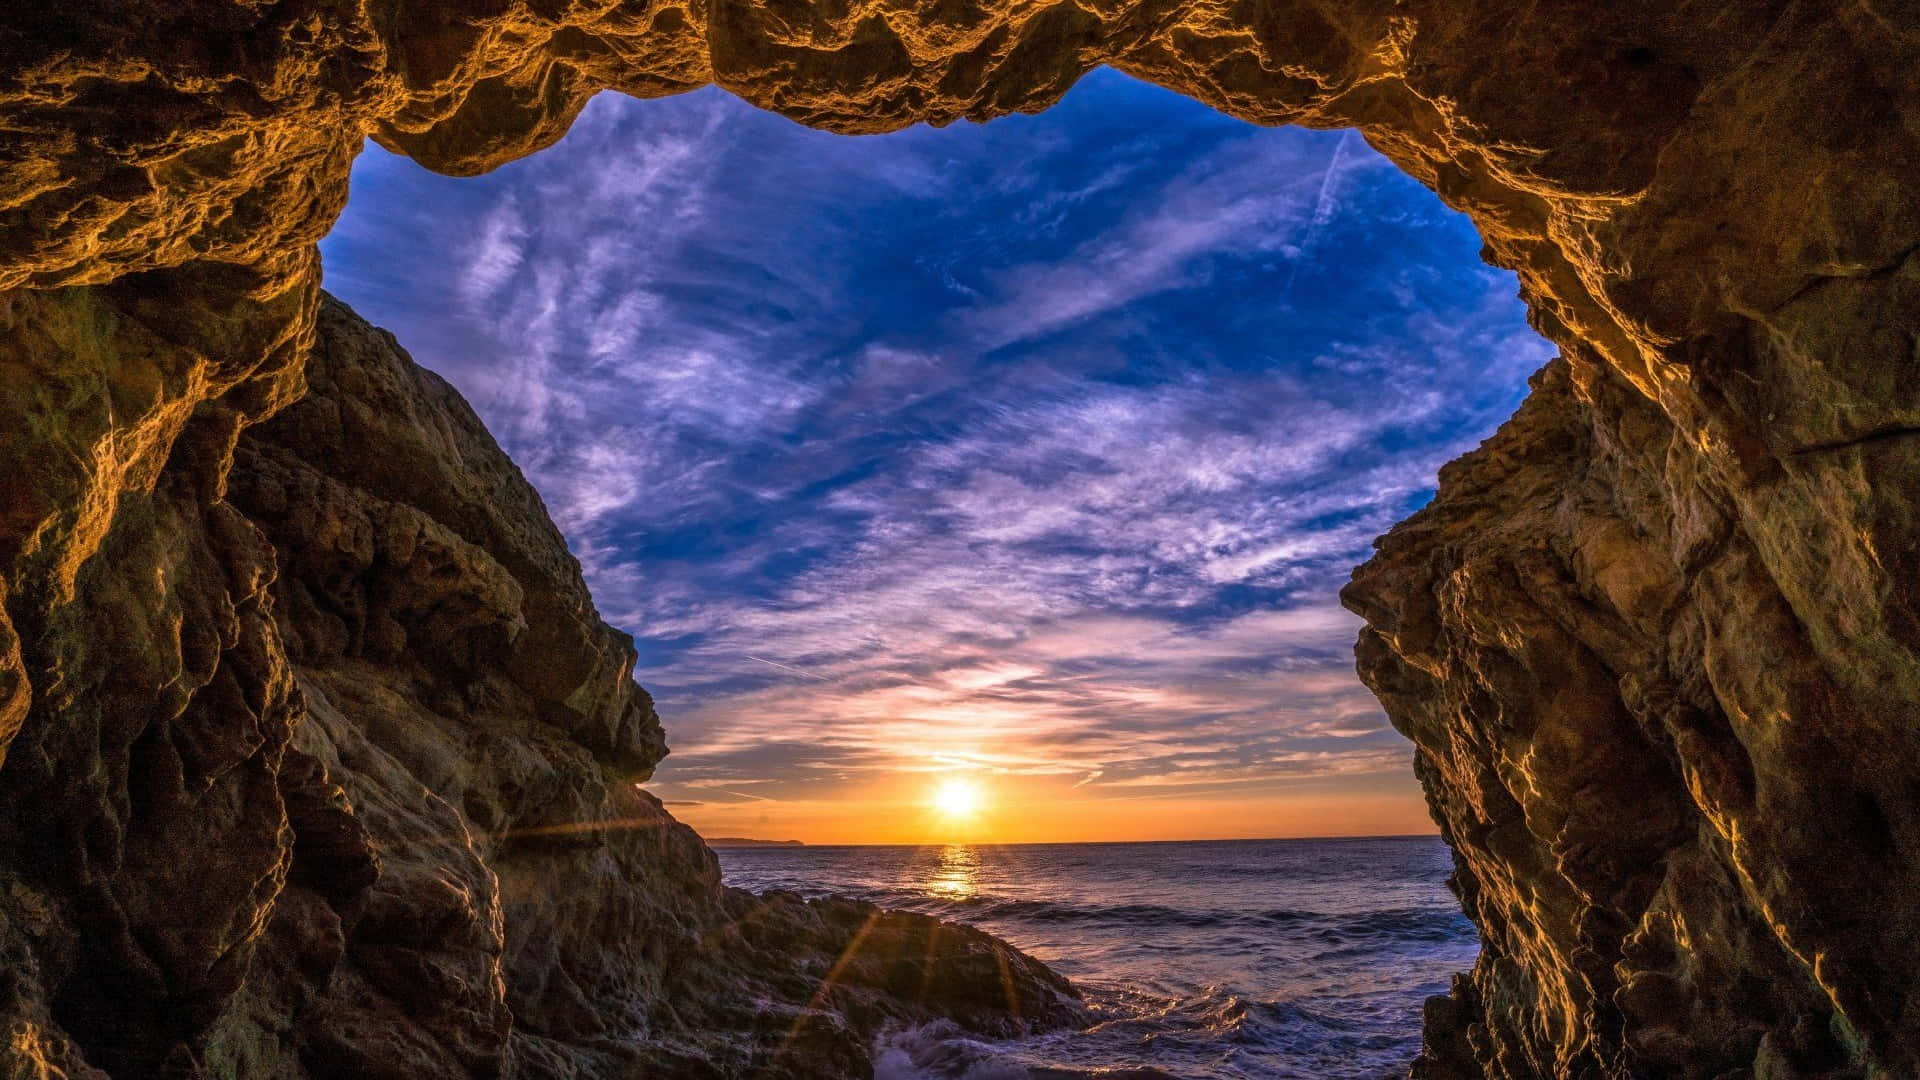 Enjoy a mesmerizing sunset in Malibu, California